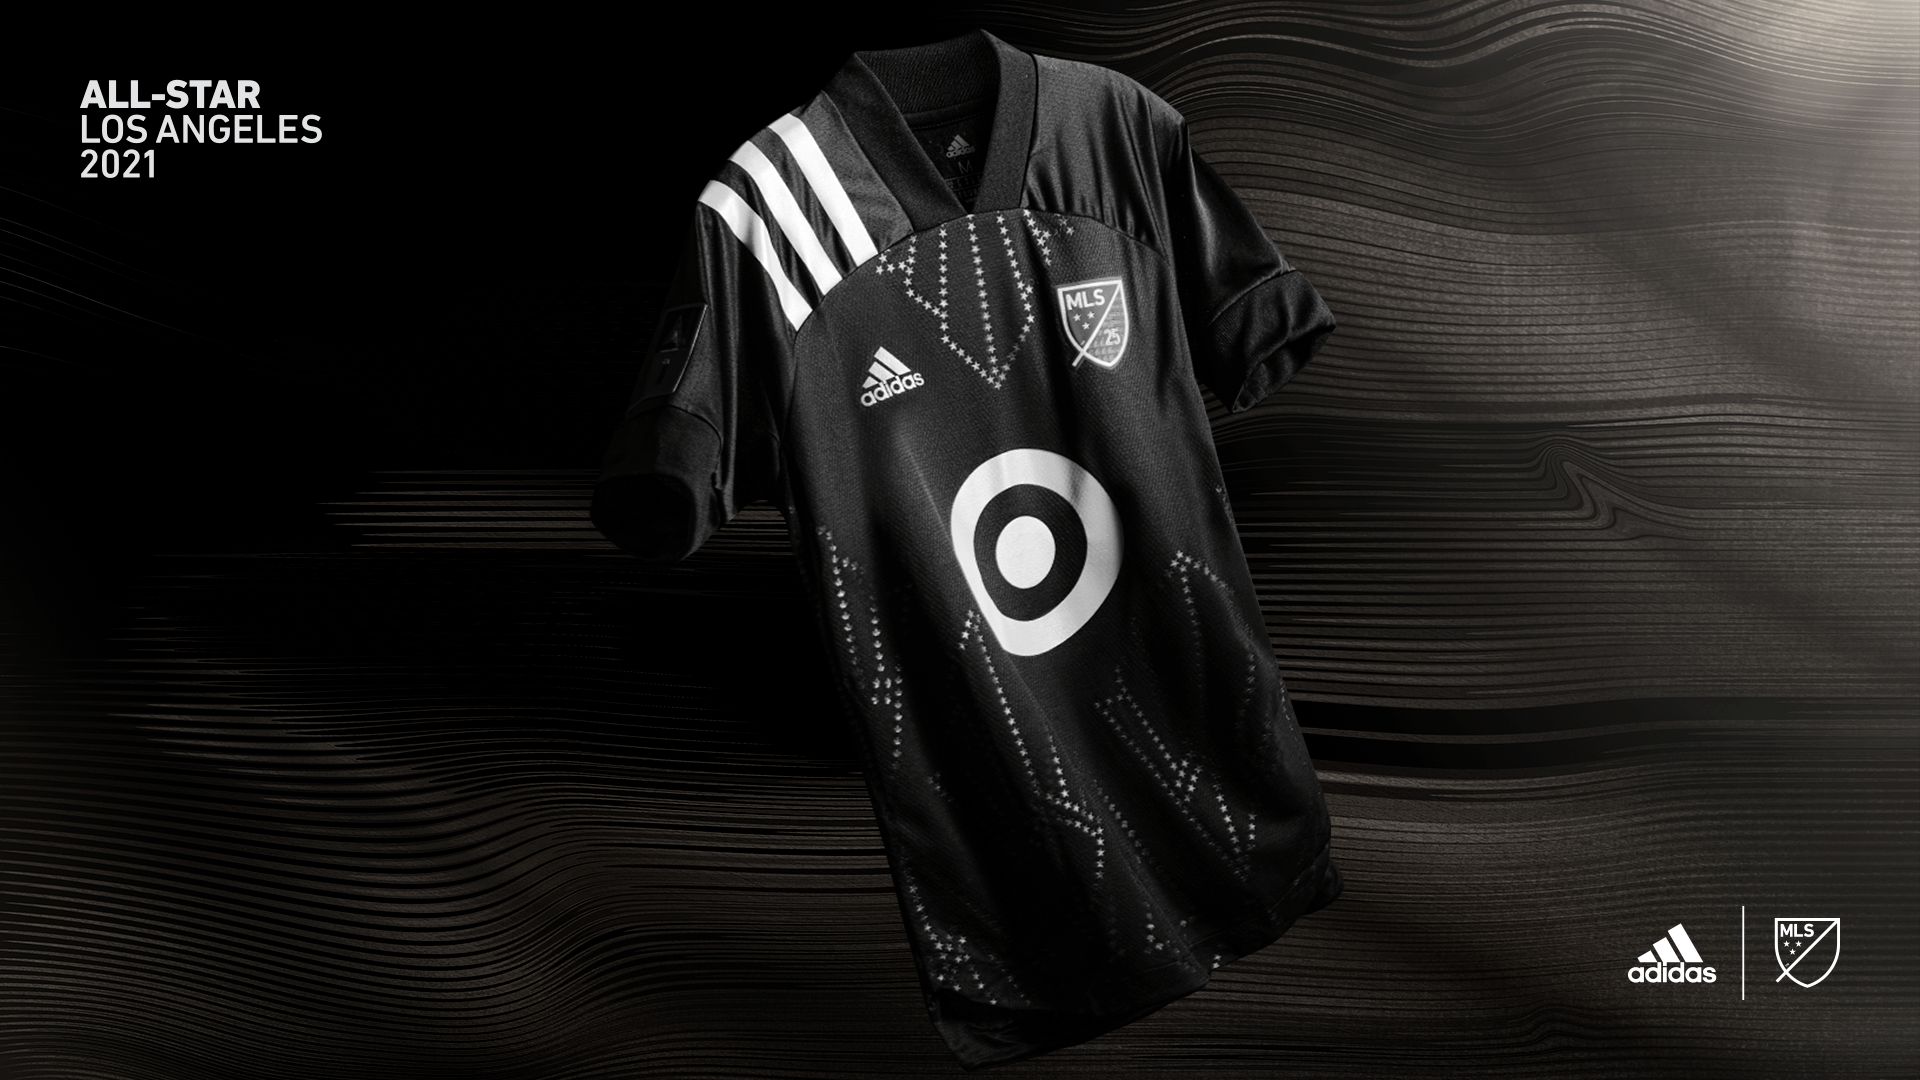 Exclusive: Stunning Adidas MLS 2018 All-Star Kit